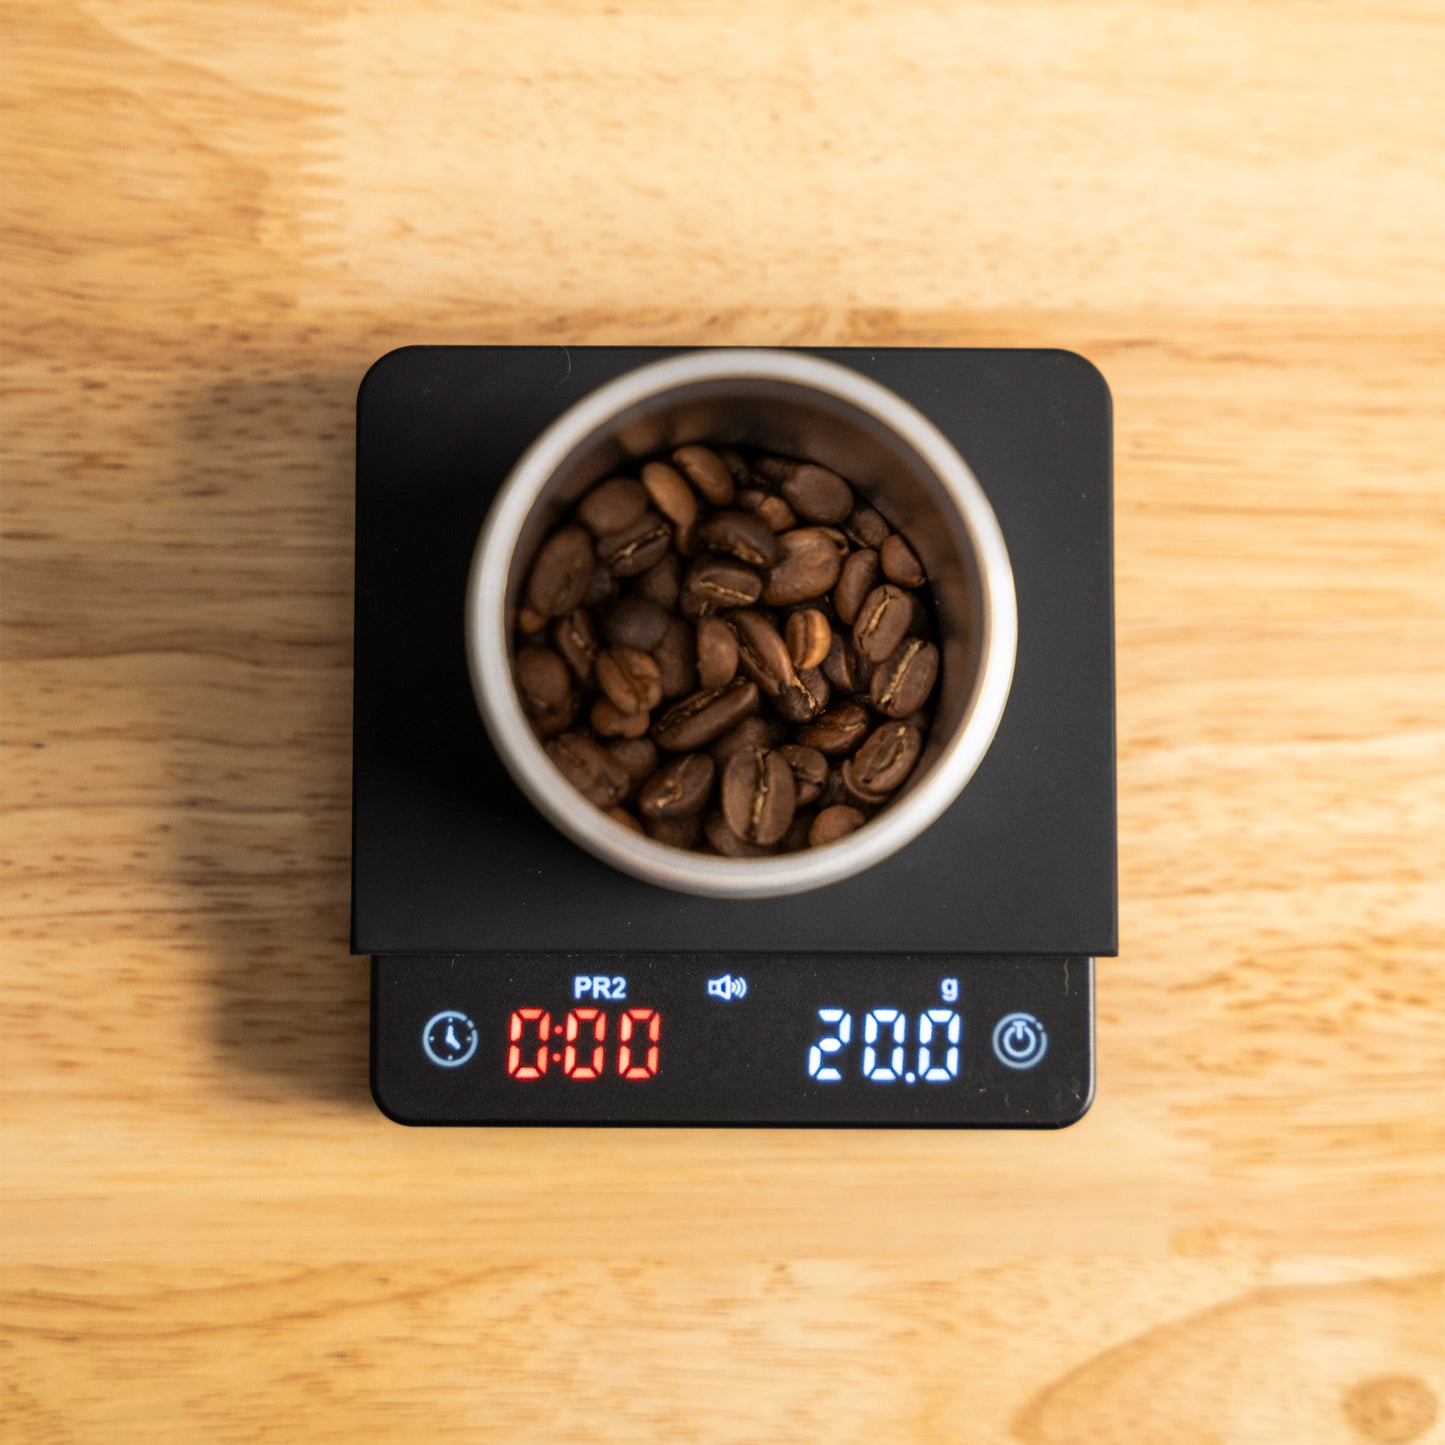 MiiCoffee Nano Coffee Scale with Timer